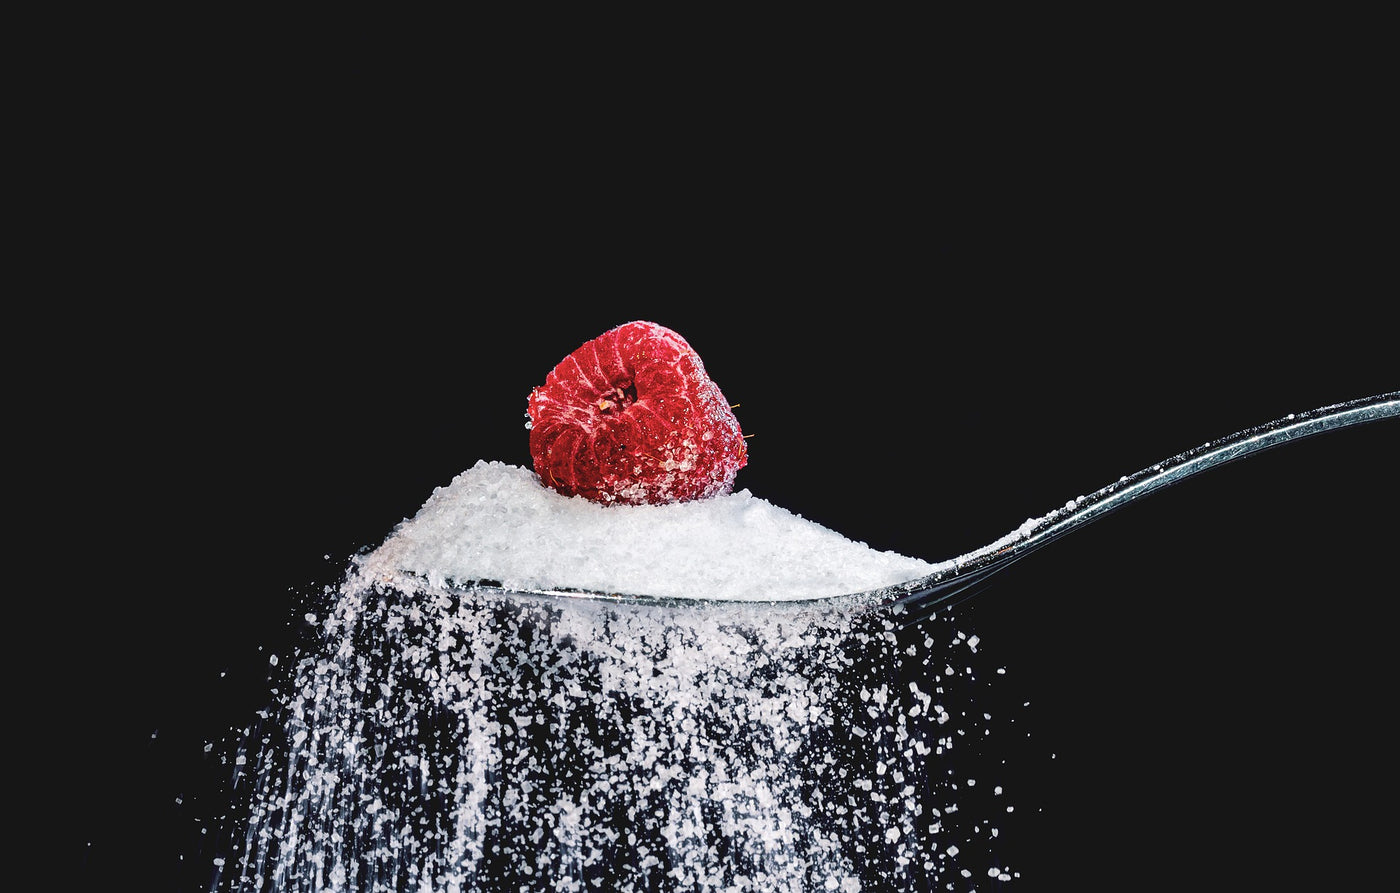 Ten smart ways to cut down on sugar